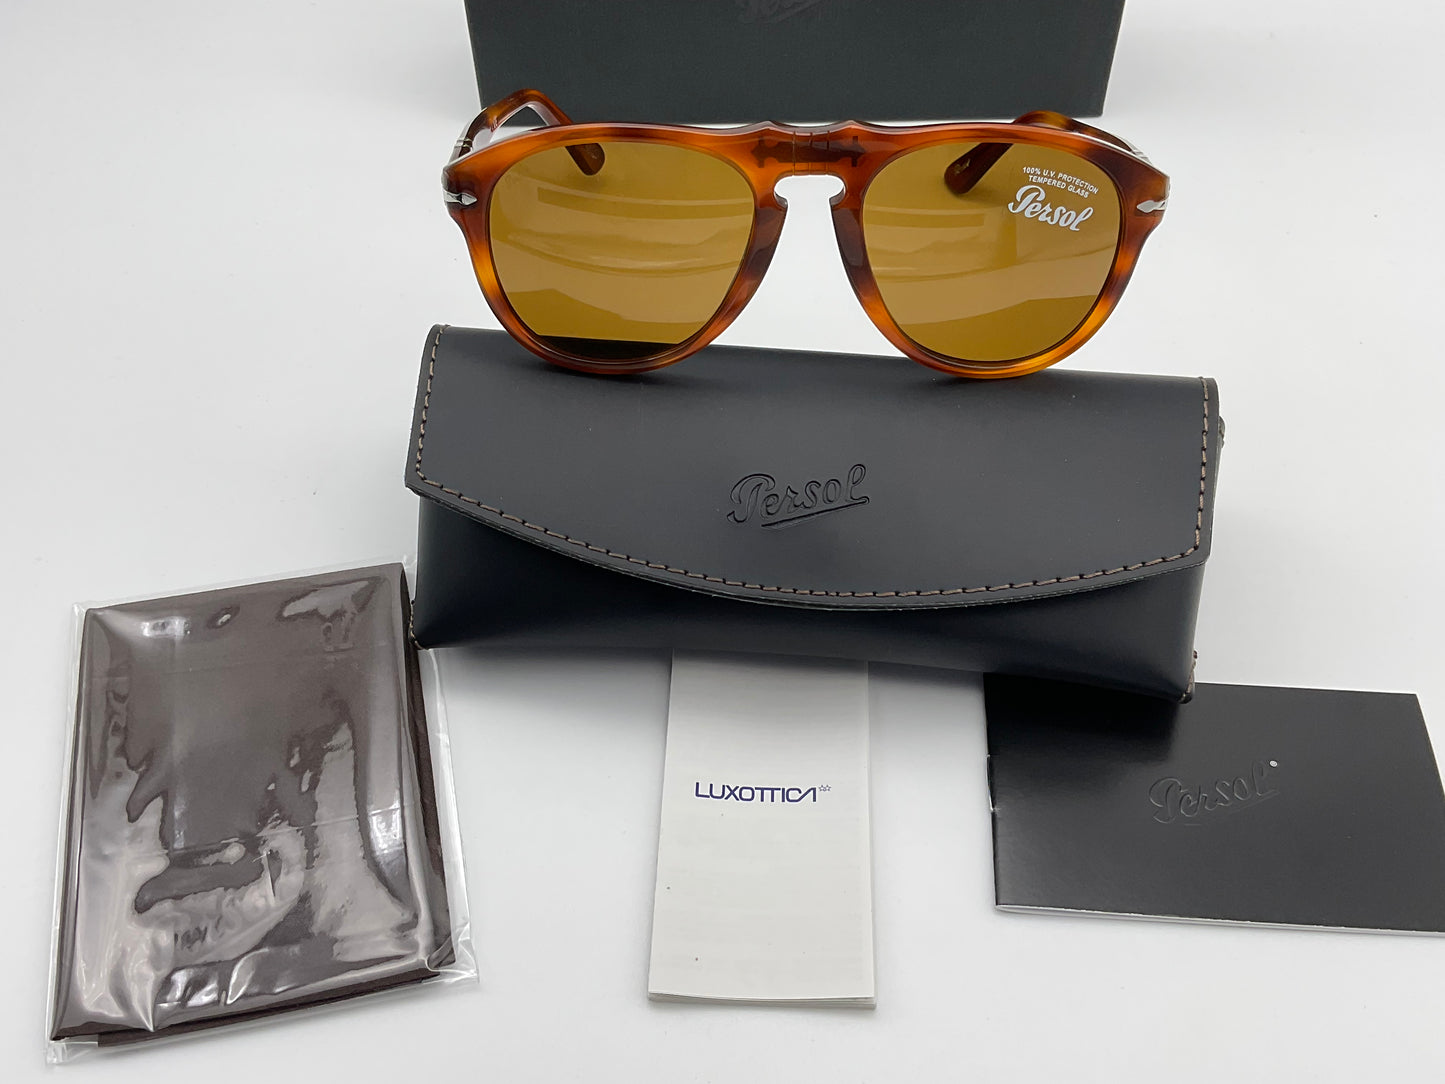 Persol Sunglasses PO 649 54mm 96/33 Terra DI Siena Brown Lenses made in Italy